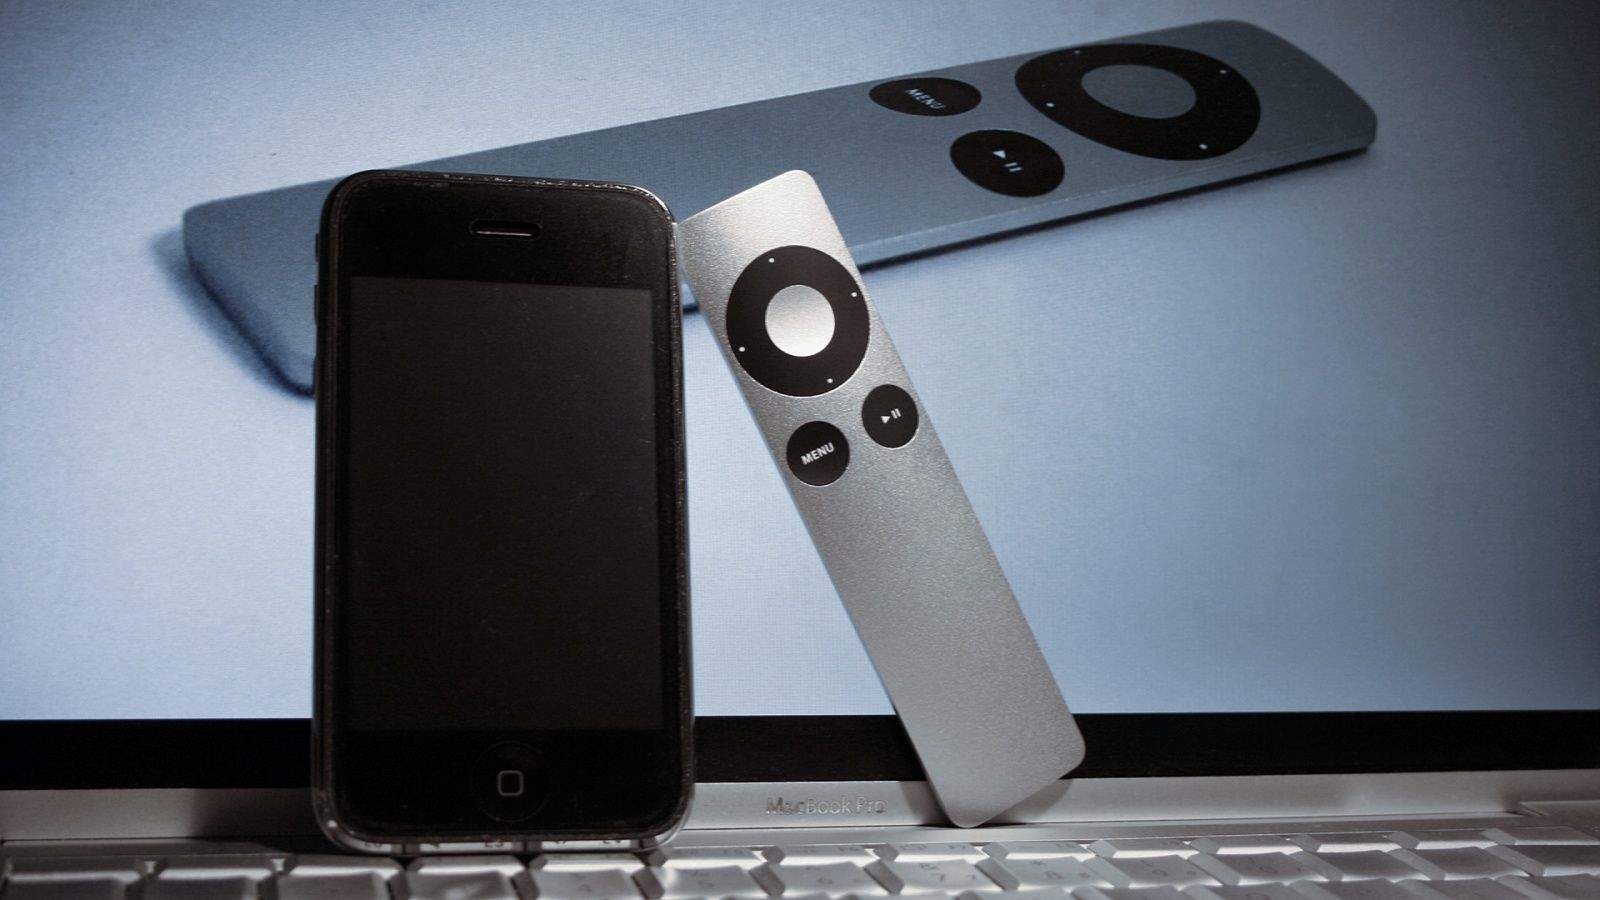 Use apple tv remote for macbook pro lenovo x1 carbon thinkpad i7